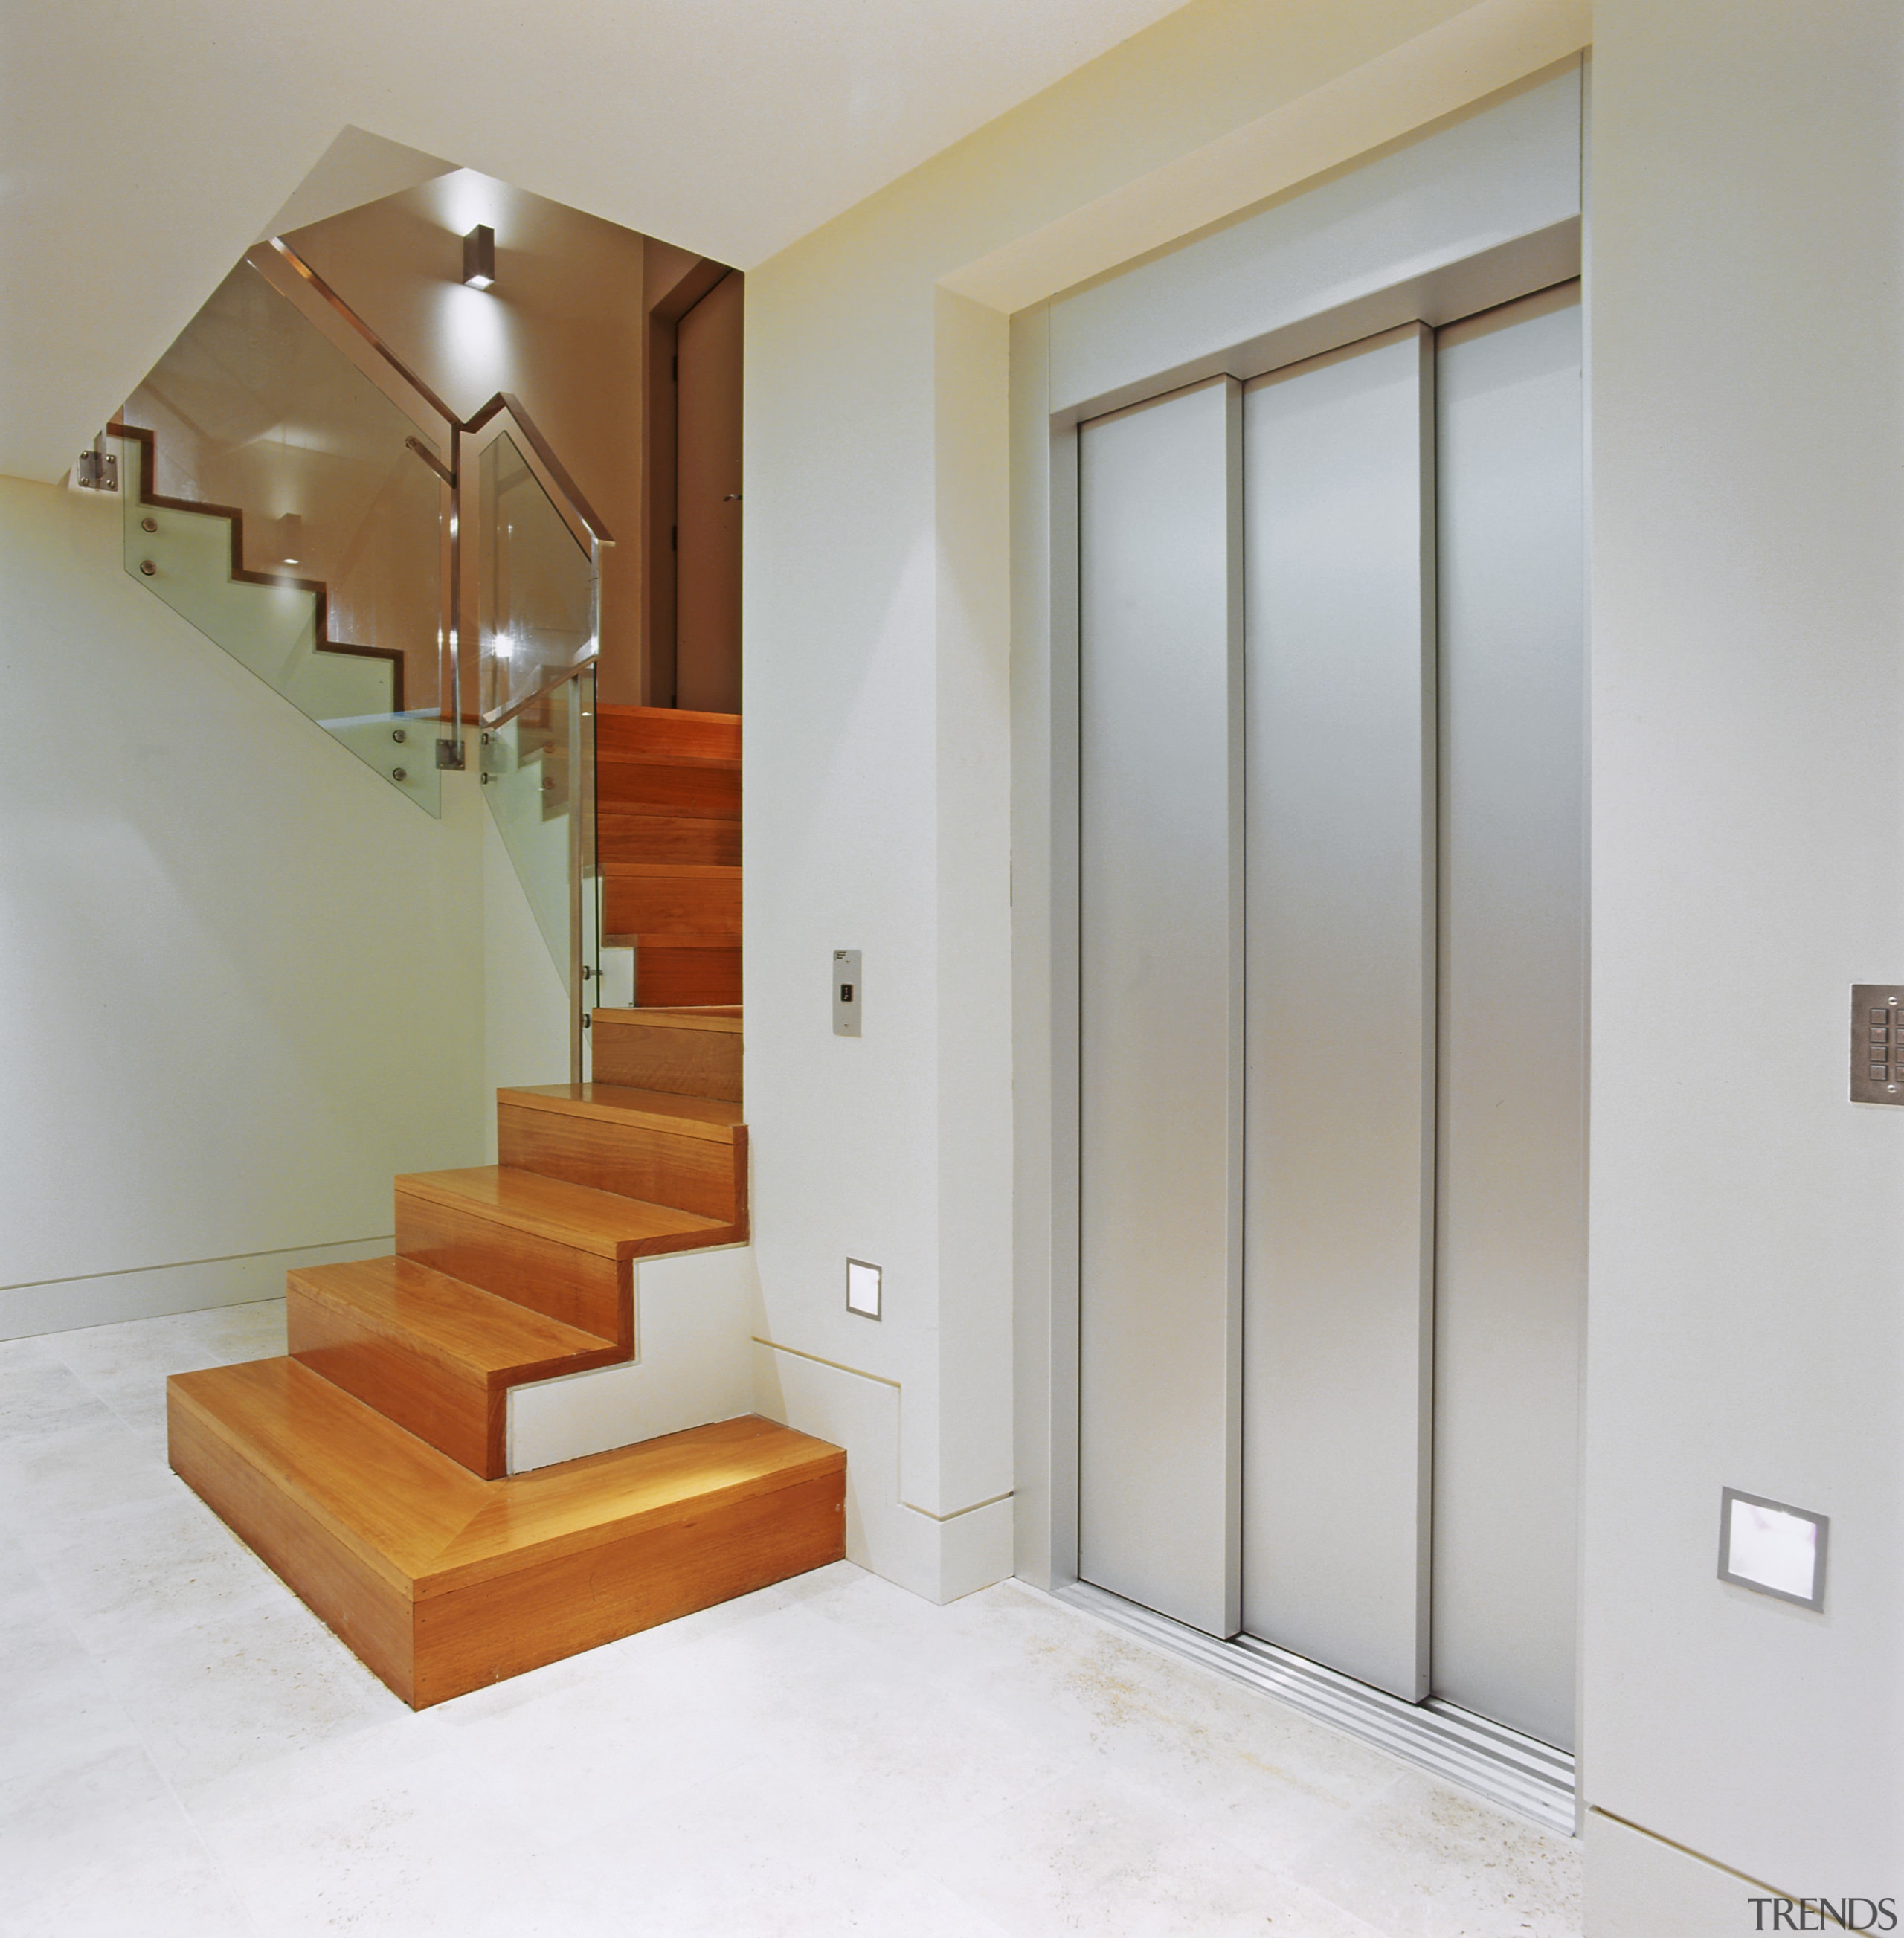 Modern elevators by Easy Living Home Elevators - door, floor, home, interior design, real estate, stairs, wall, gray